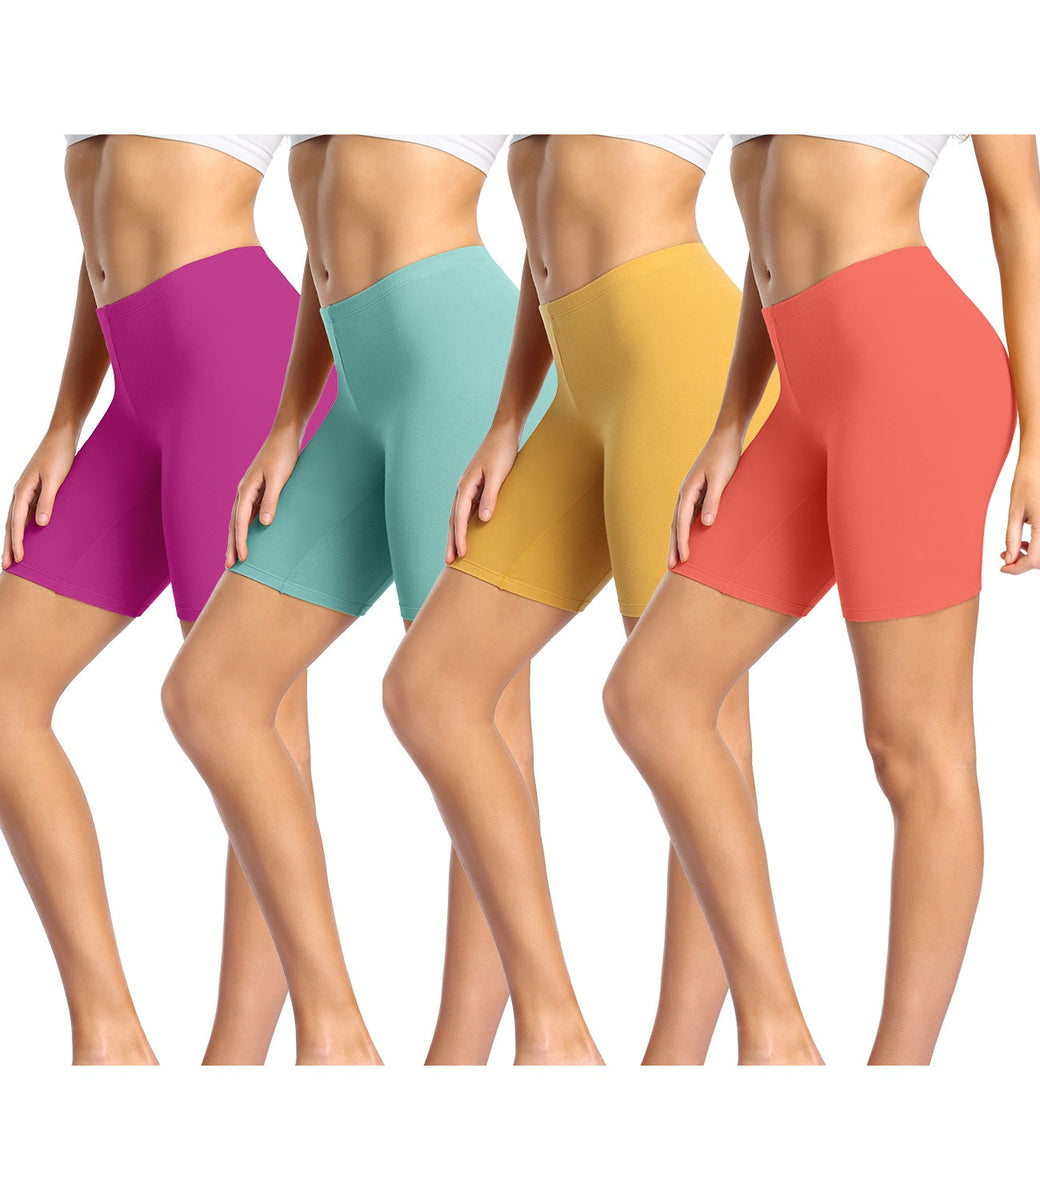 wirarpa Women's Cotton Boxer Briefs 3 Inseam Ladies Safety Boxer Shorts  Anti Chafing Boyshorts Panties Black 4 Pack Size S : : Fashion